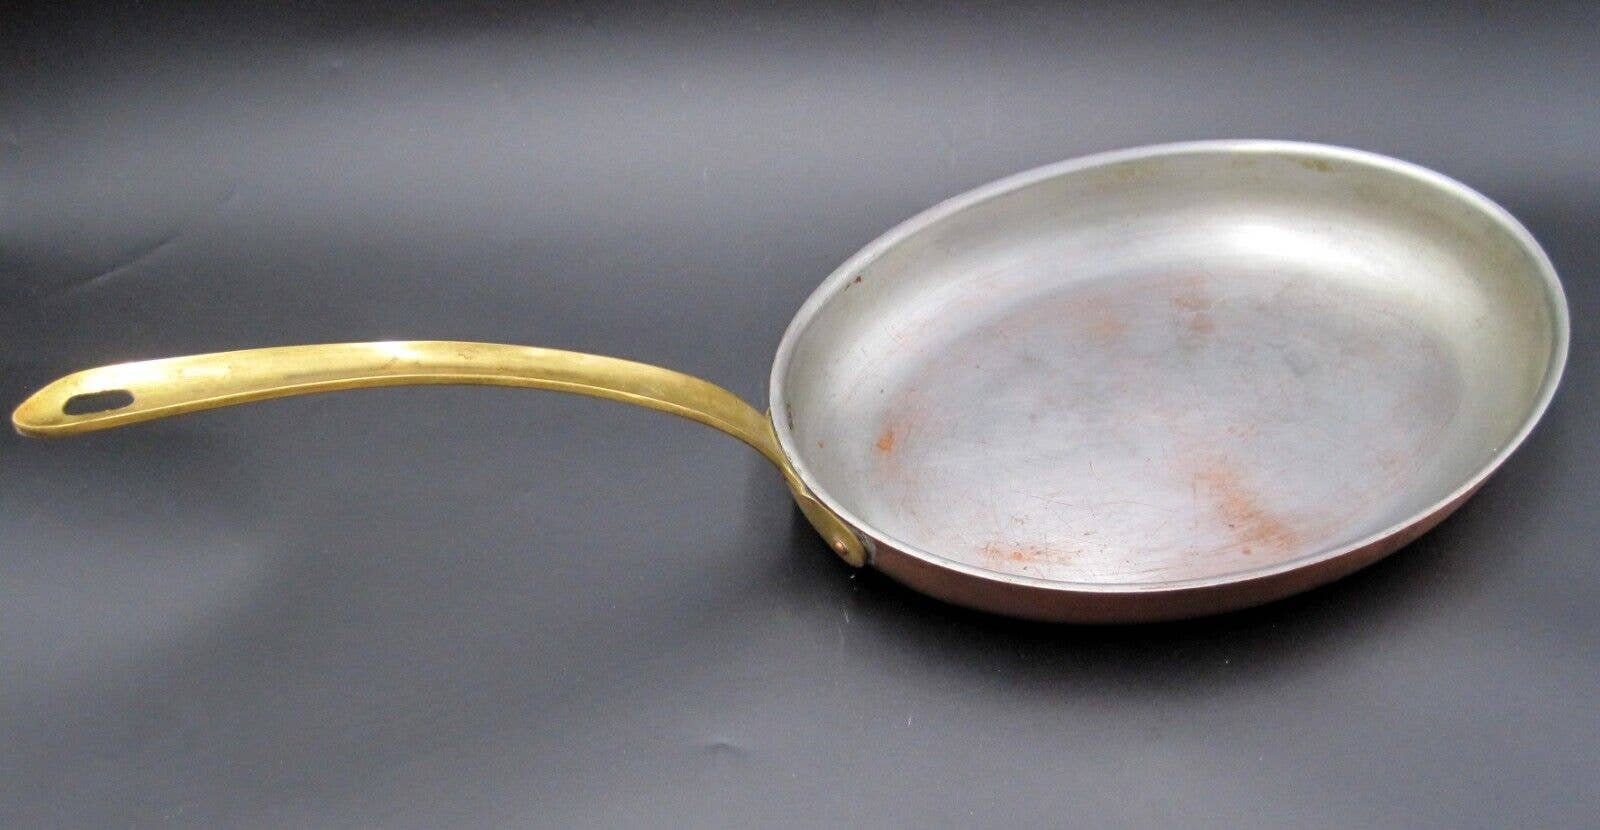 Classic Oval Frying Pan, 30x20 cm (11.8 x 7.9 in)